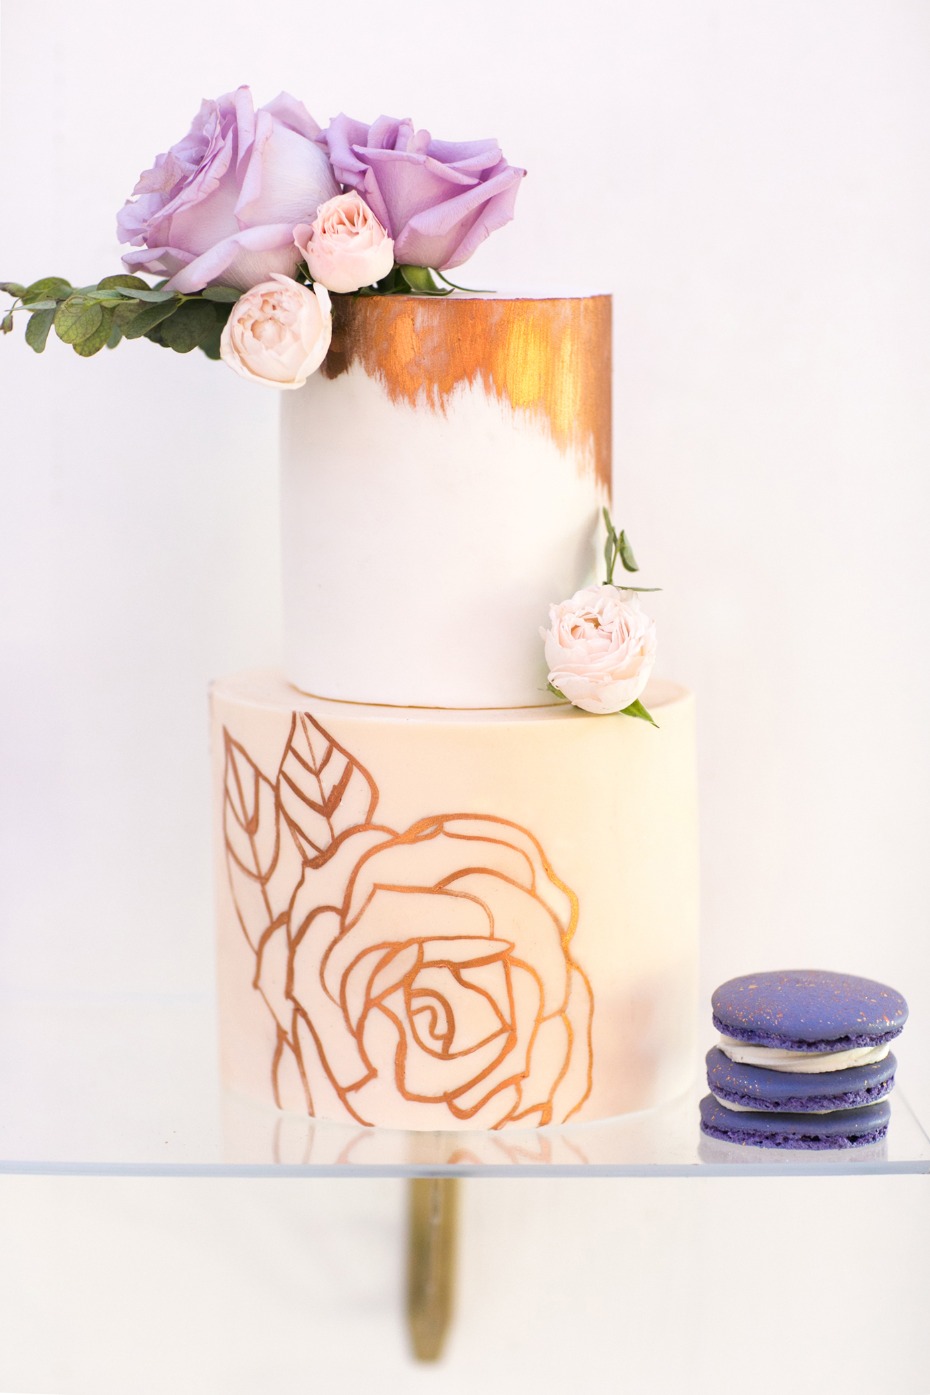 rose painted wedding cake